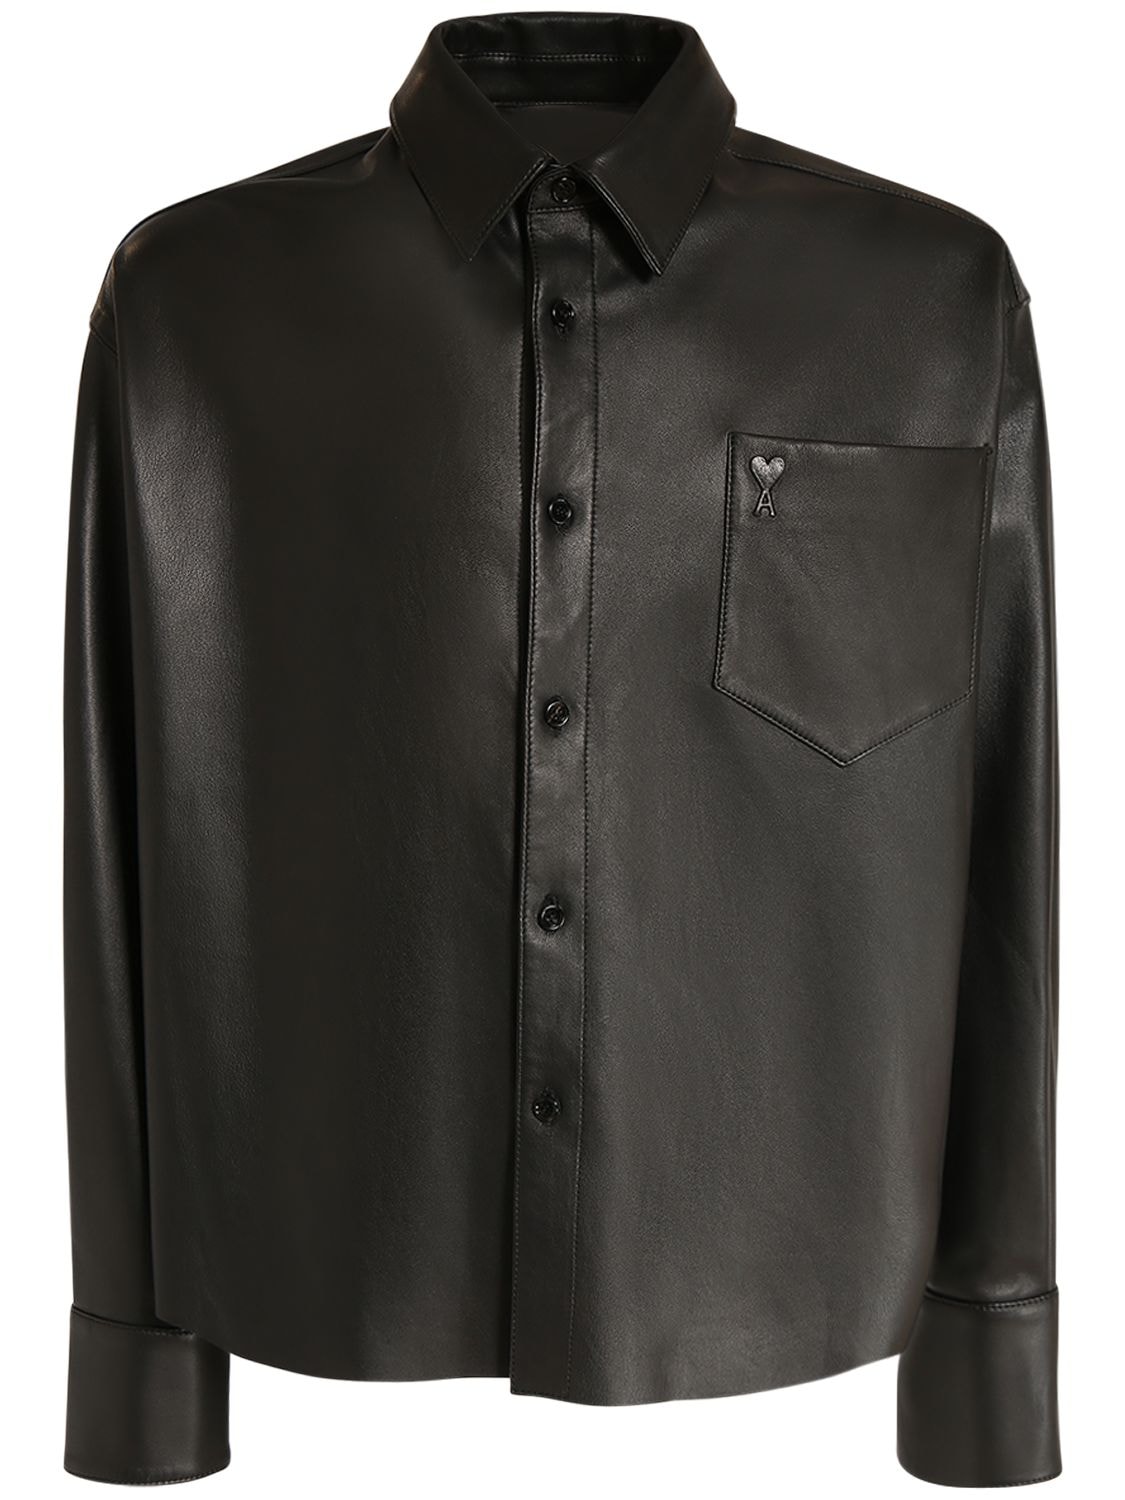 Image of Adc Leather Overshirt